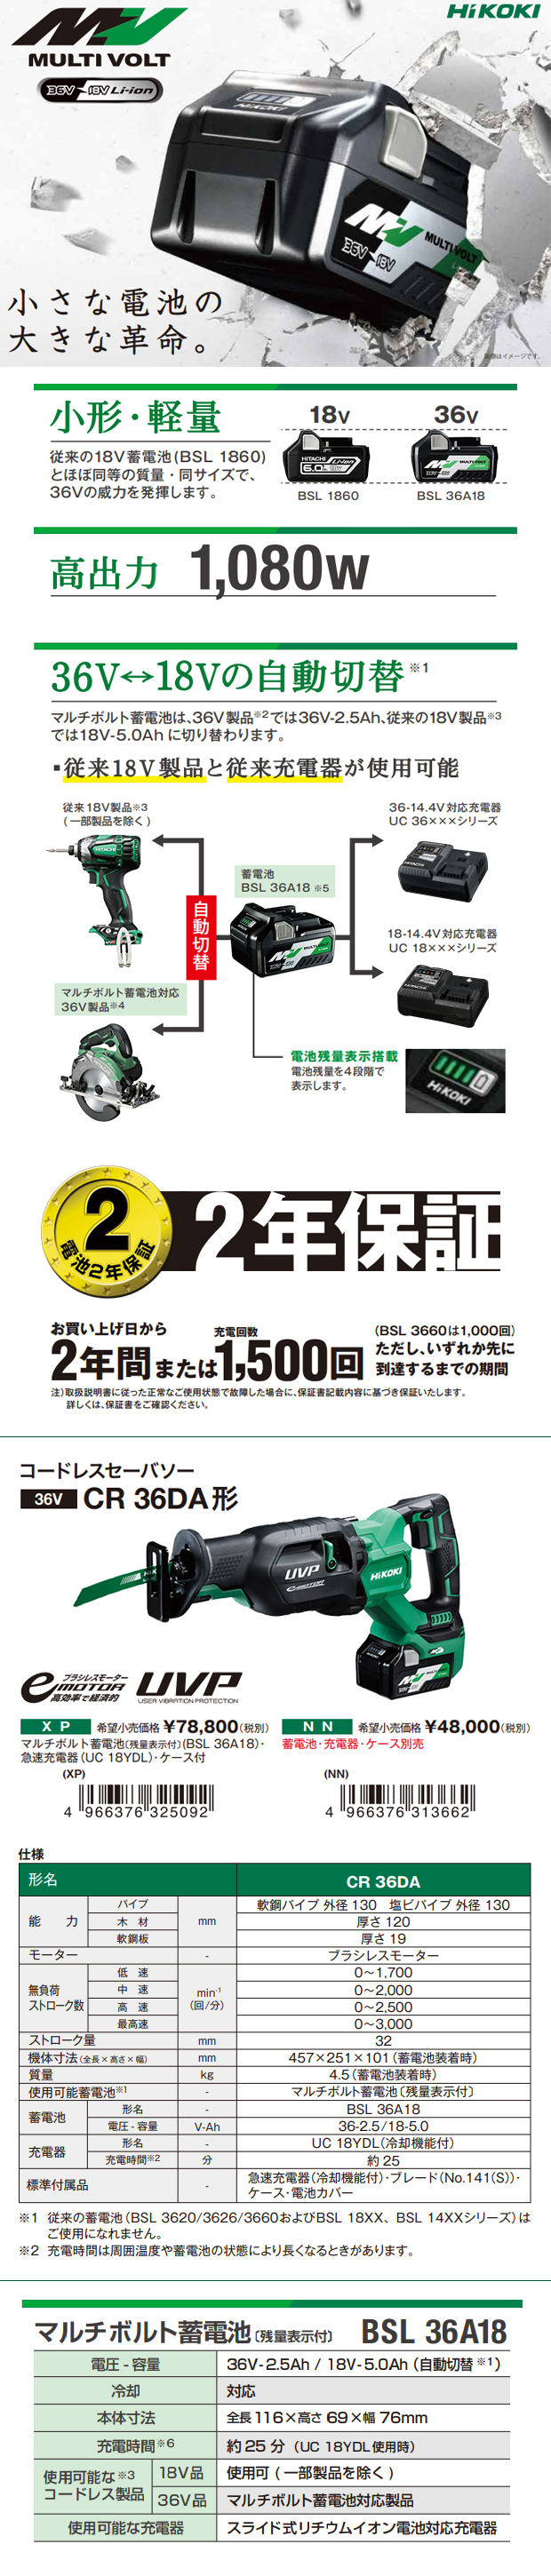 HiKOKI マルチボルト コードレスセーバソー CR36DA 電動工具・エアー ...